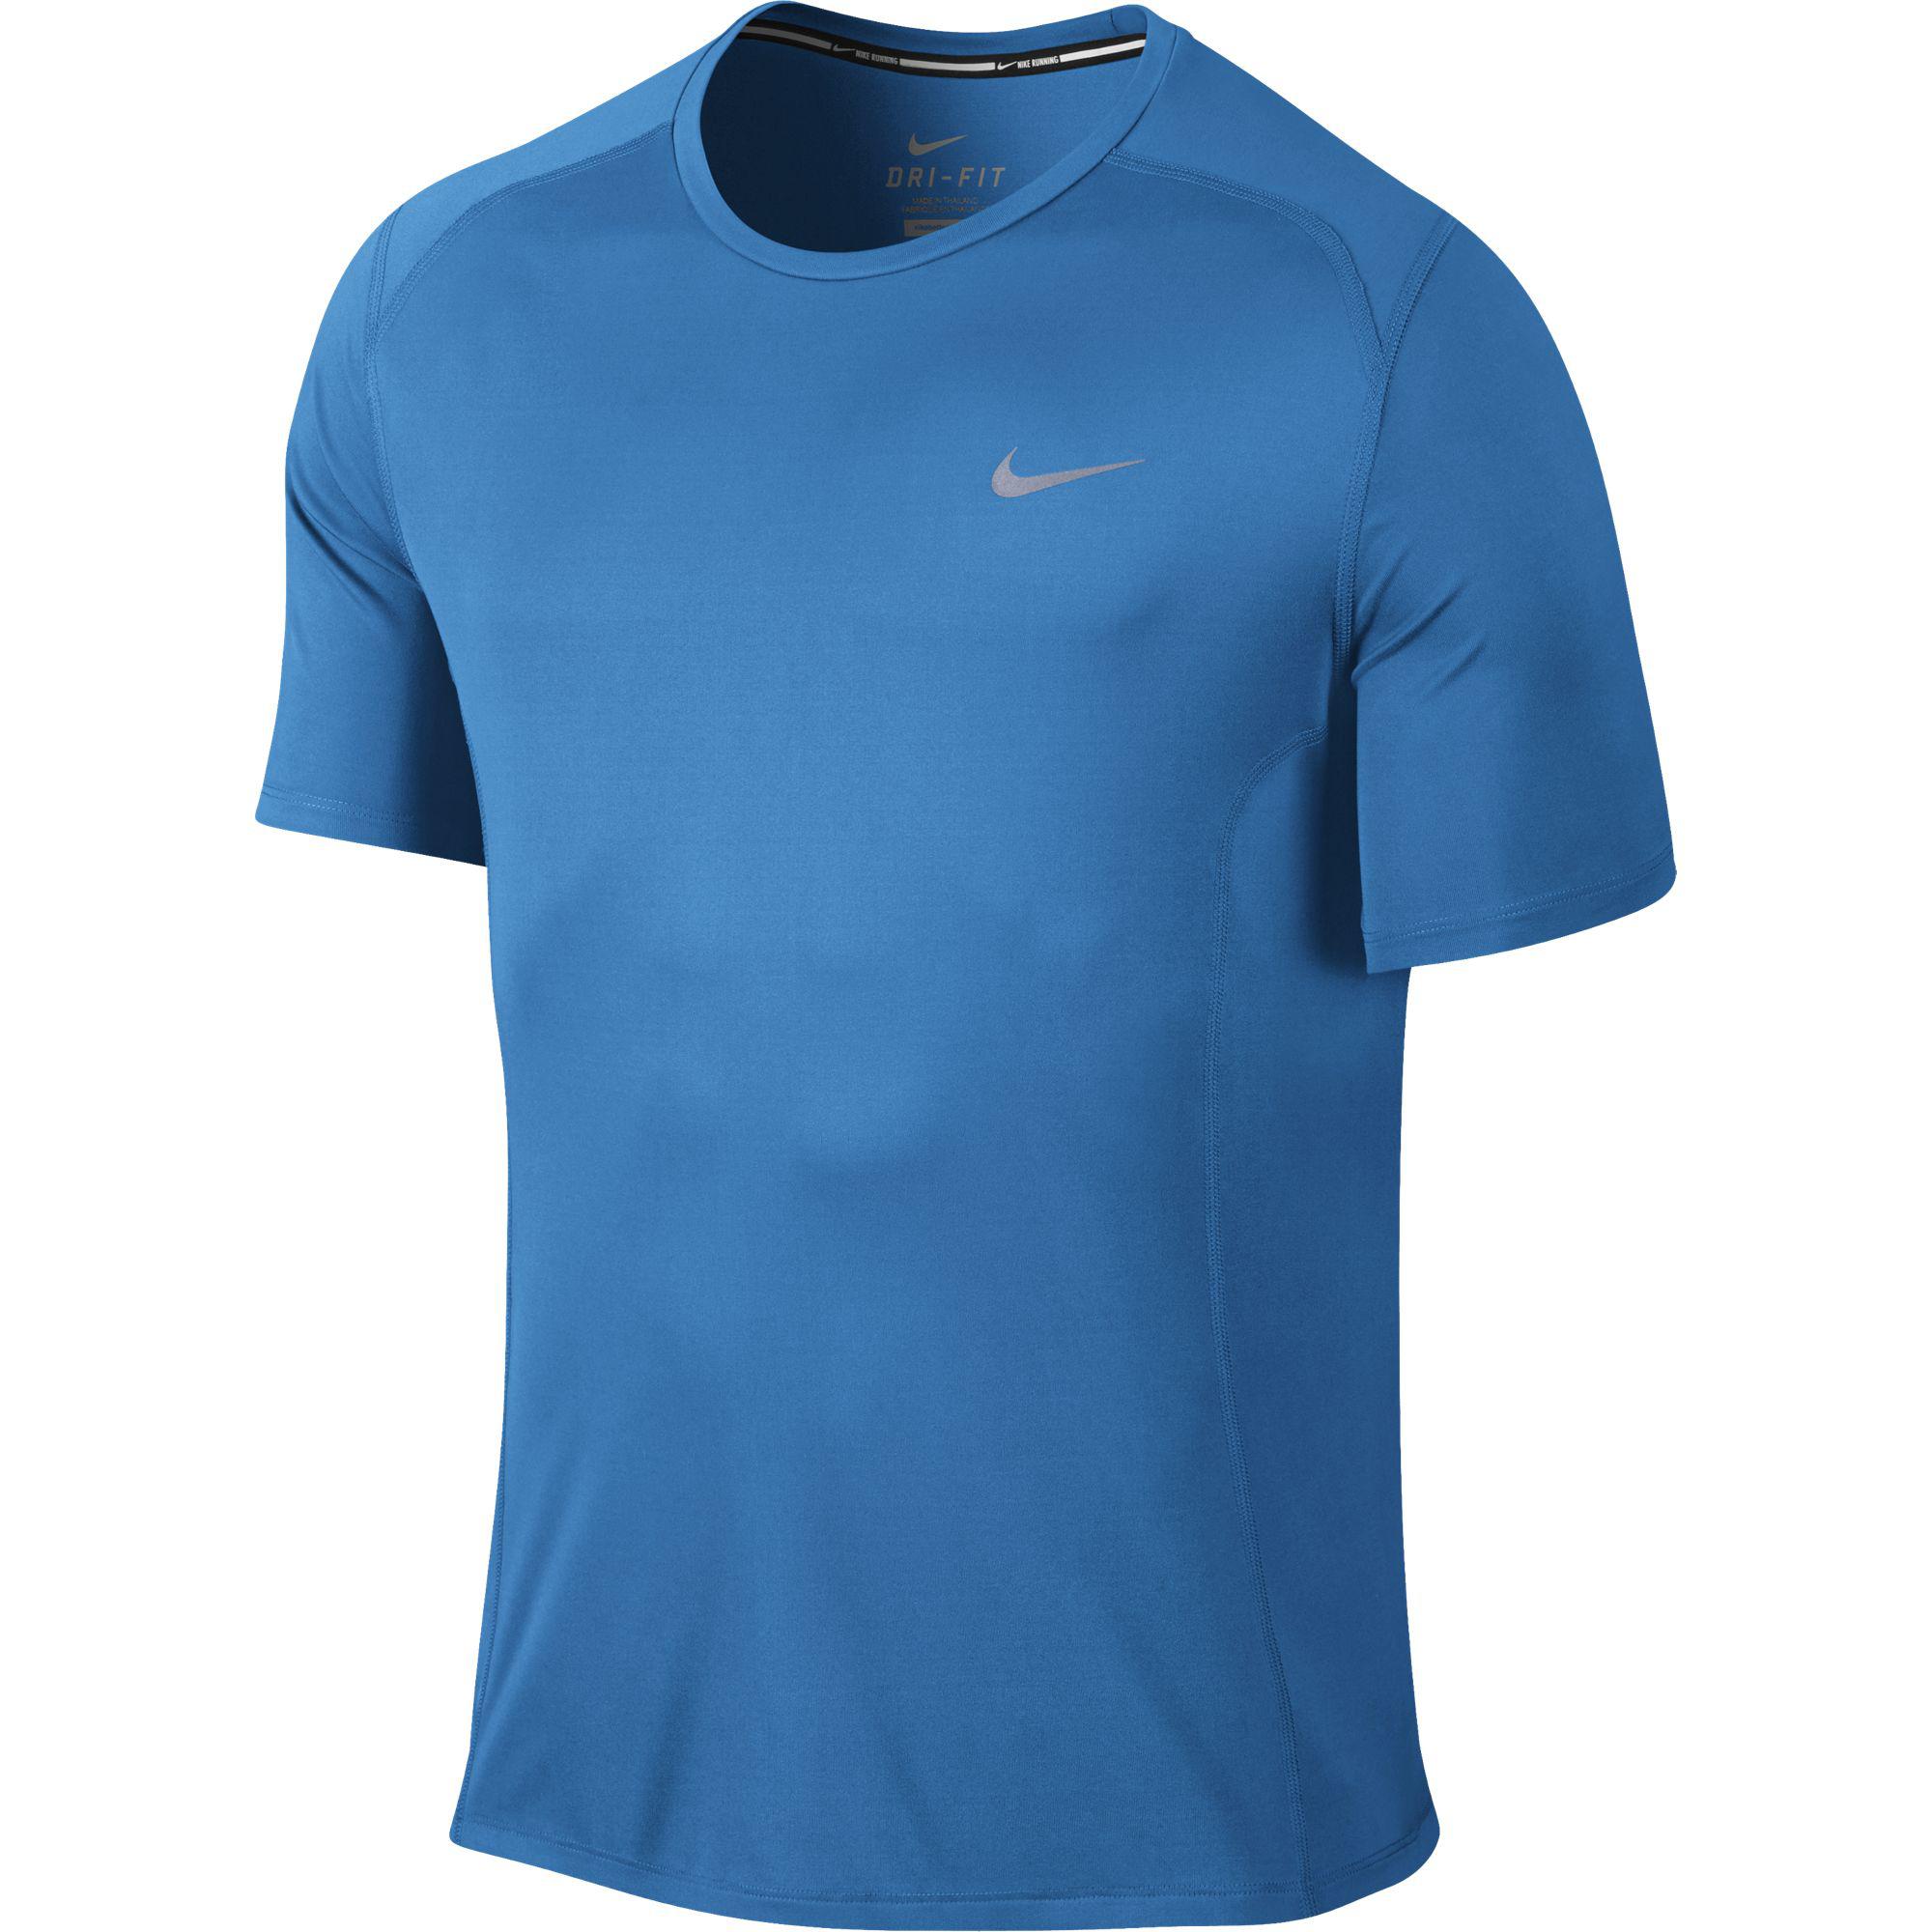 Nike Mens Dri-FIT Miler Top - Blue - Tennisnuts.com